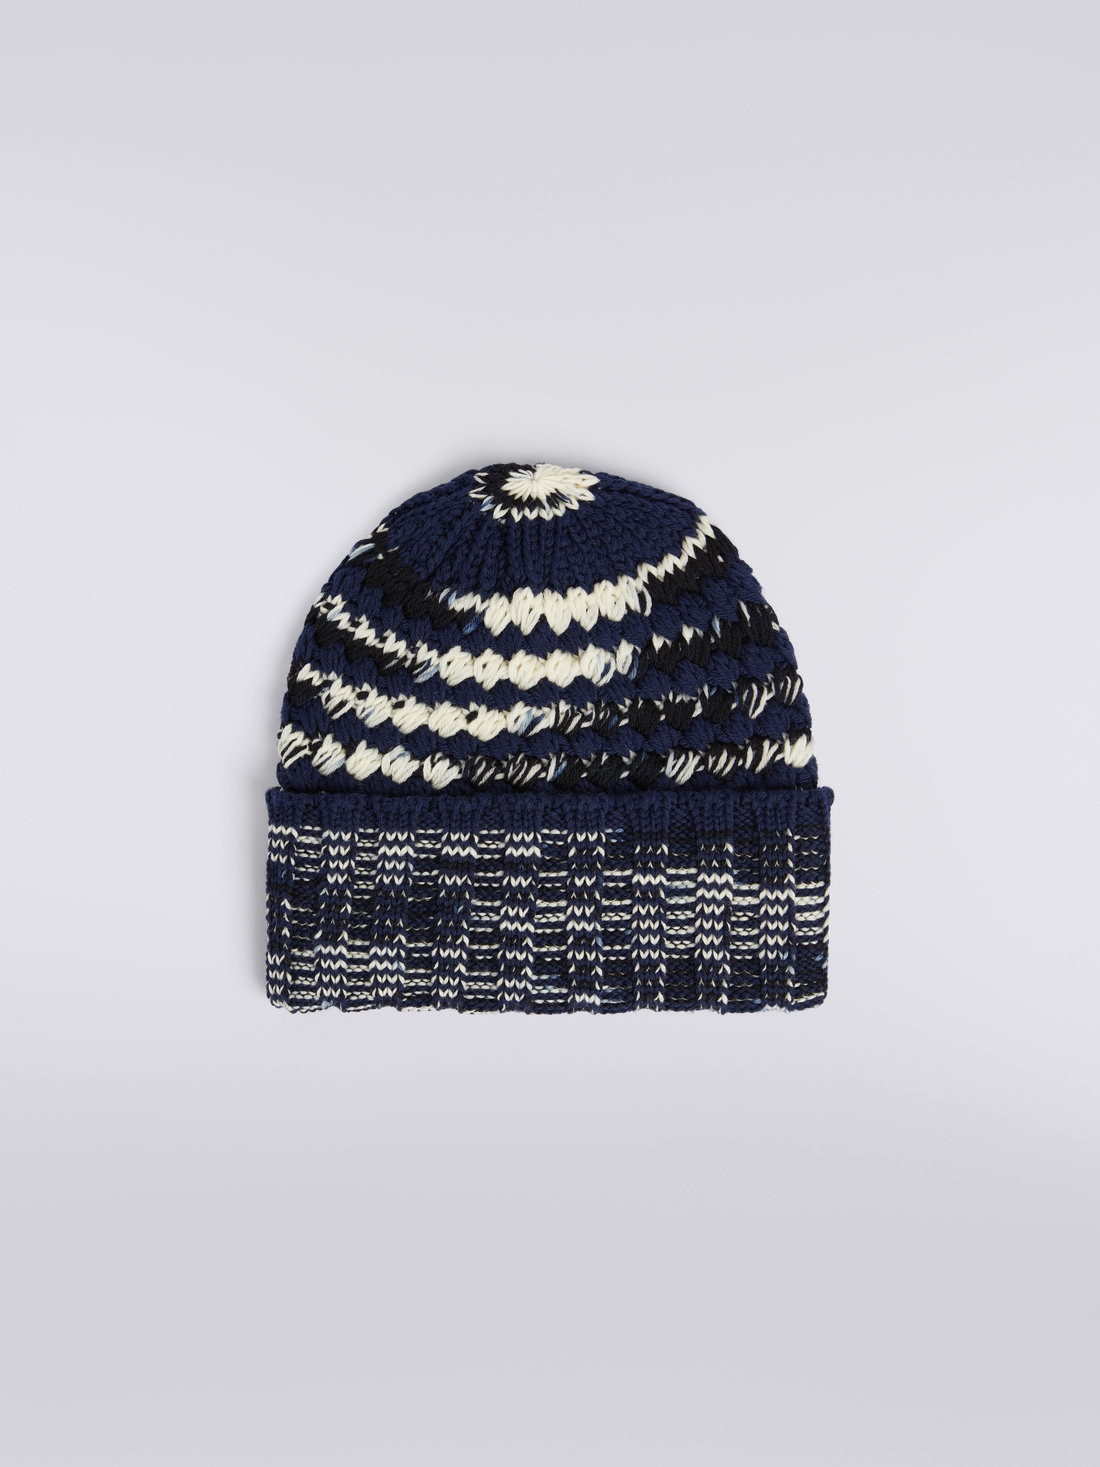 Wool knit hat  , Multicoloured  - 8053147023120 - 0